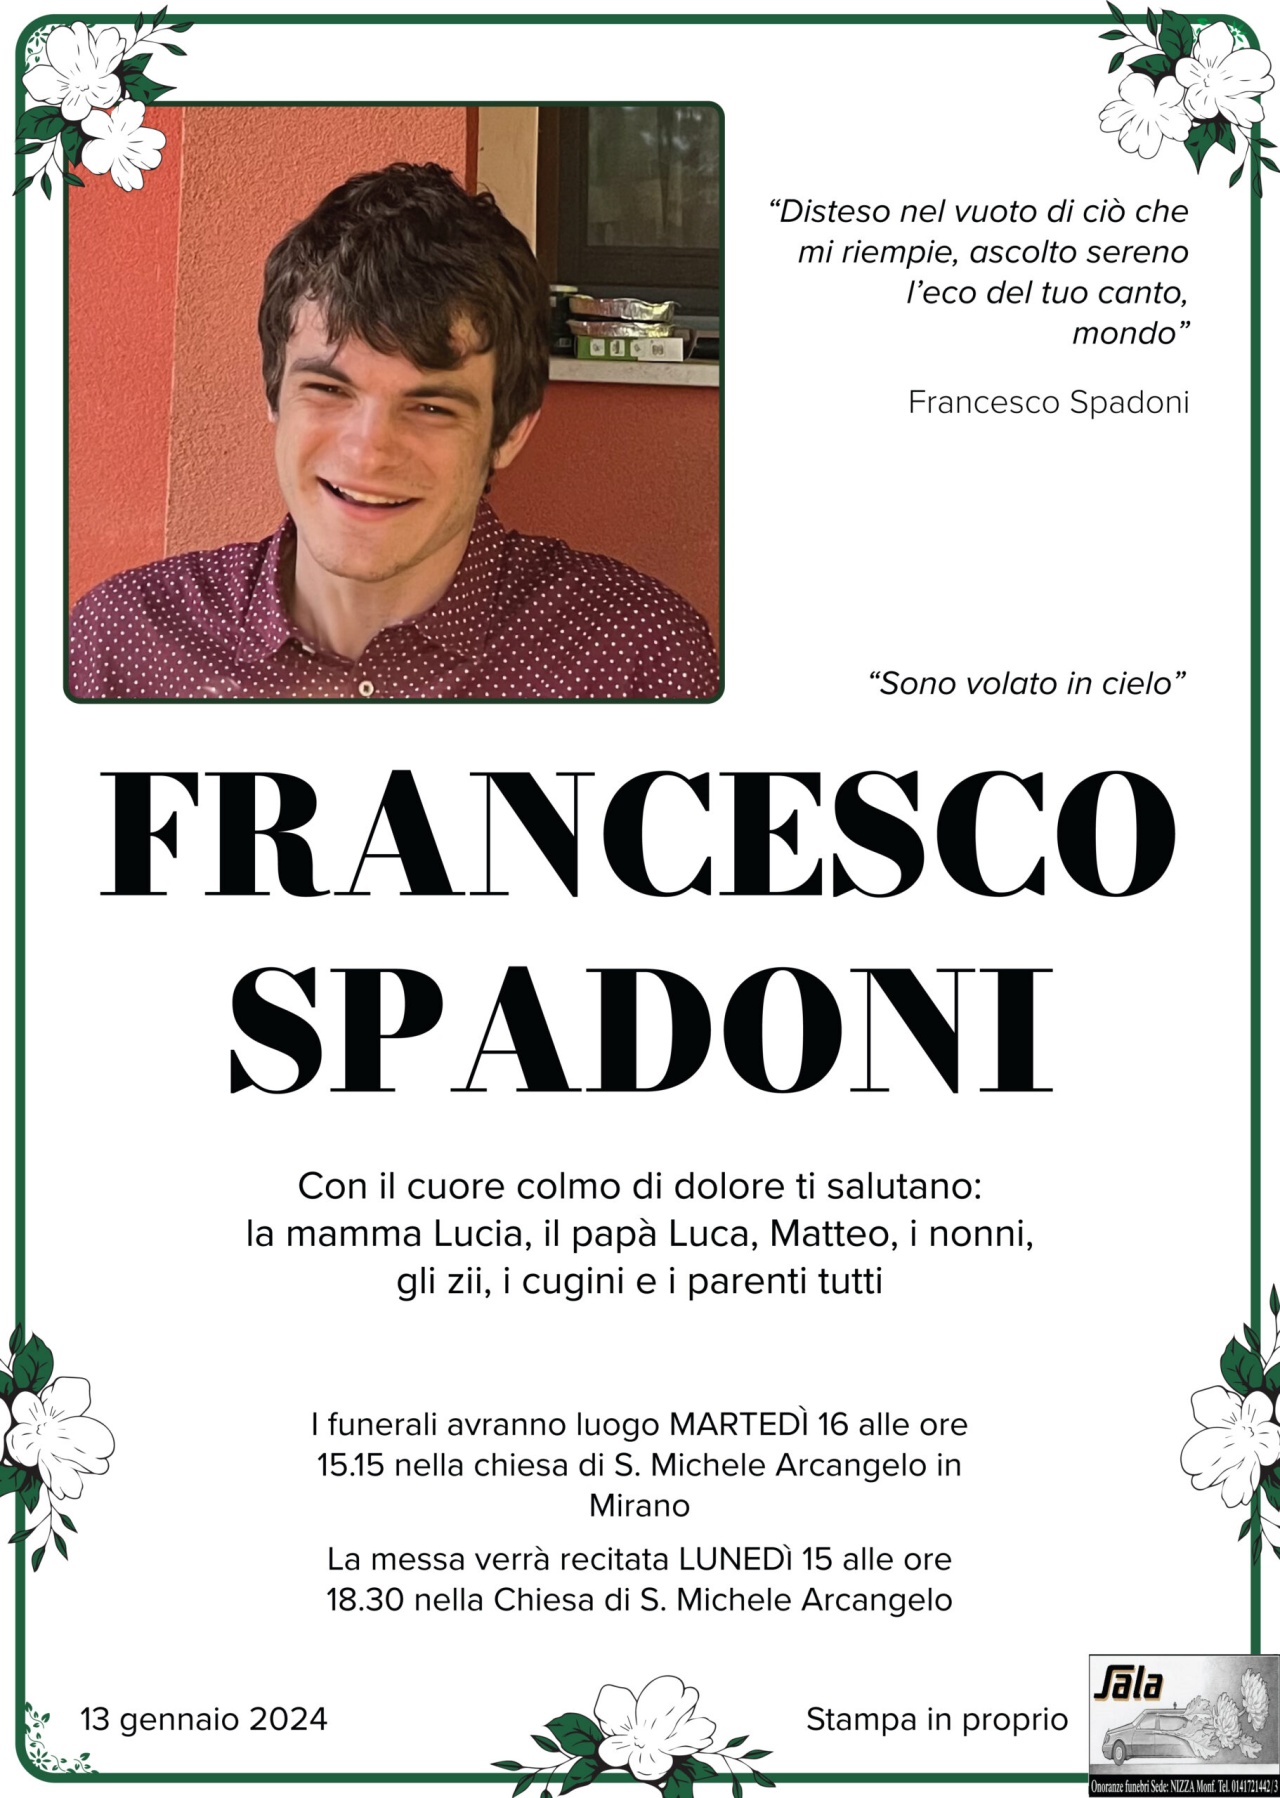 Addio a Francesco Spadoni 21 anni